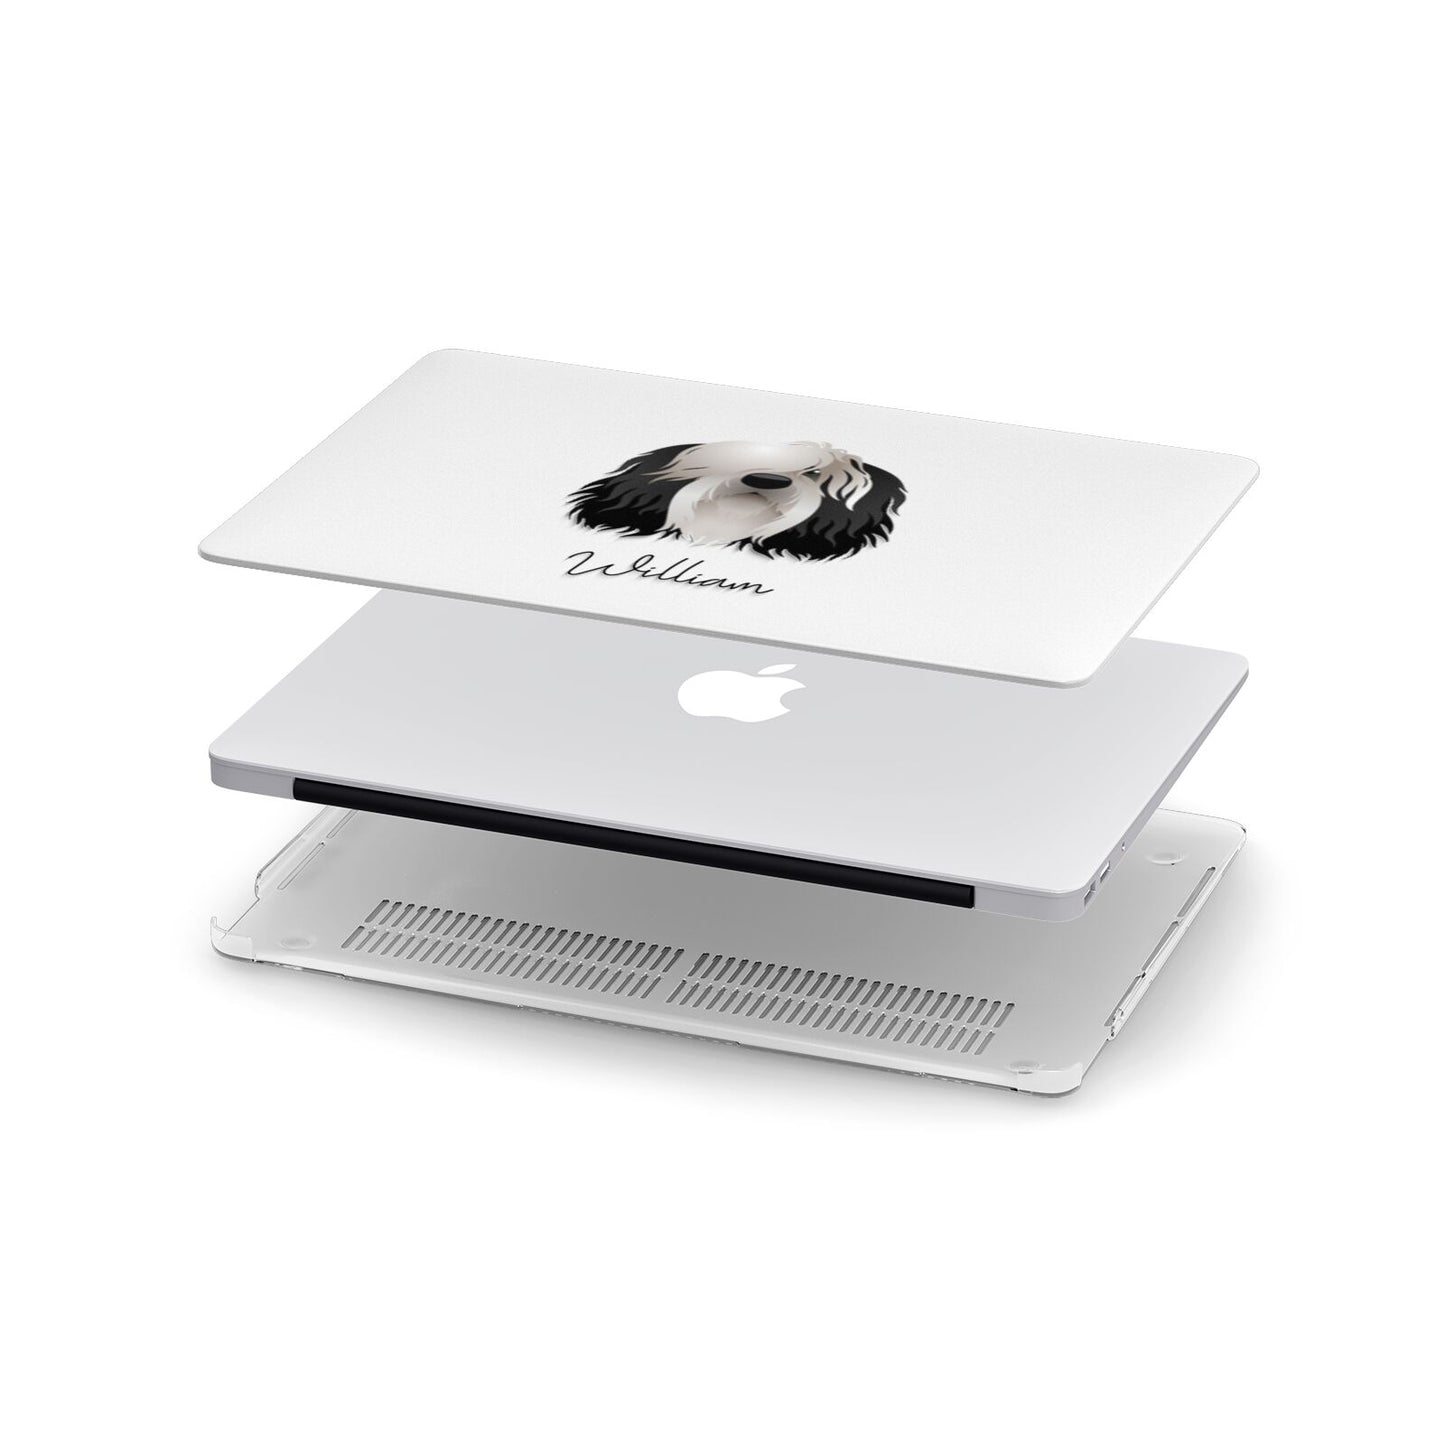 Polish Lowland Sheepdog Personalised Apple MacBook Case in Detail